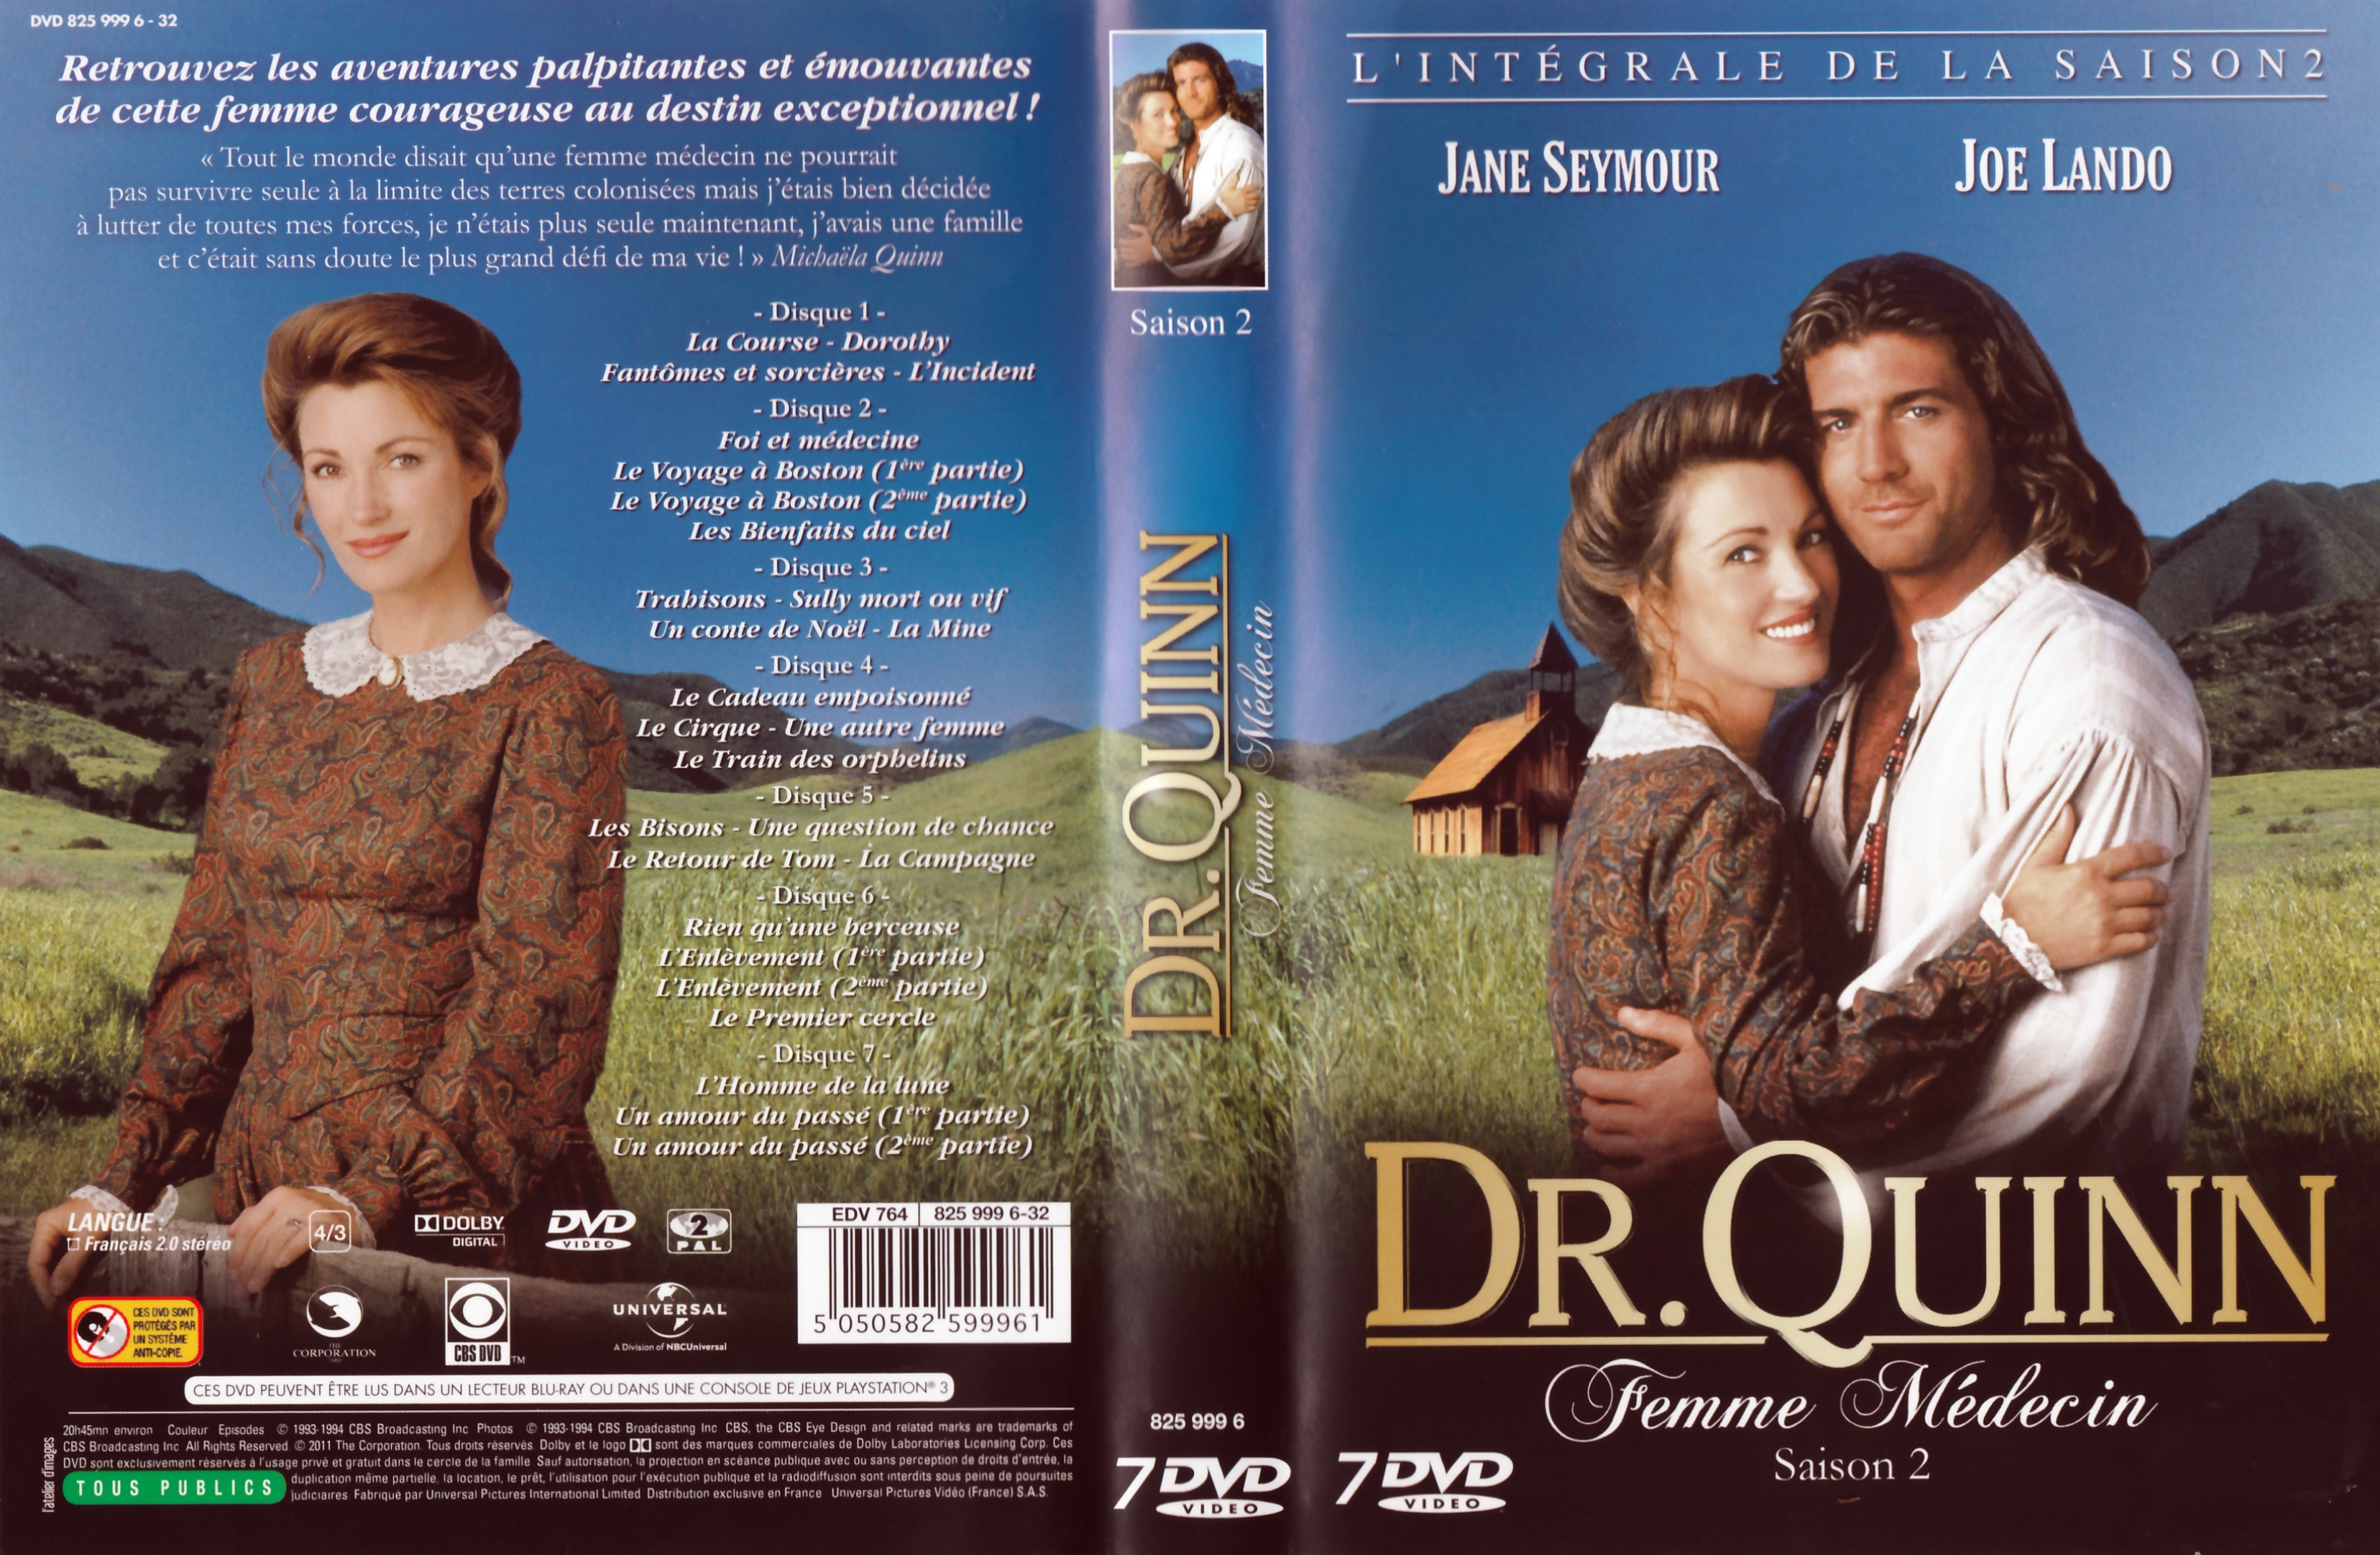 Jaquette DVD Docteur Quinn femme medecin Saison 2